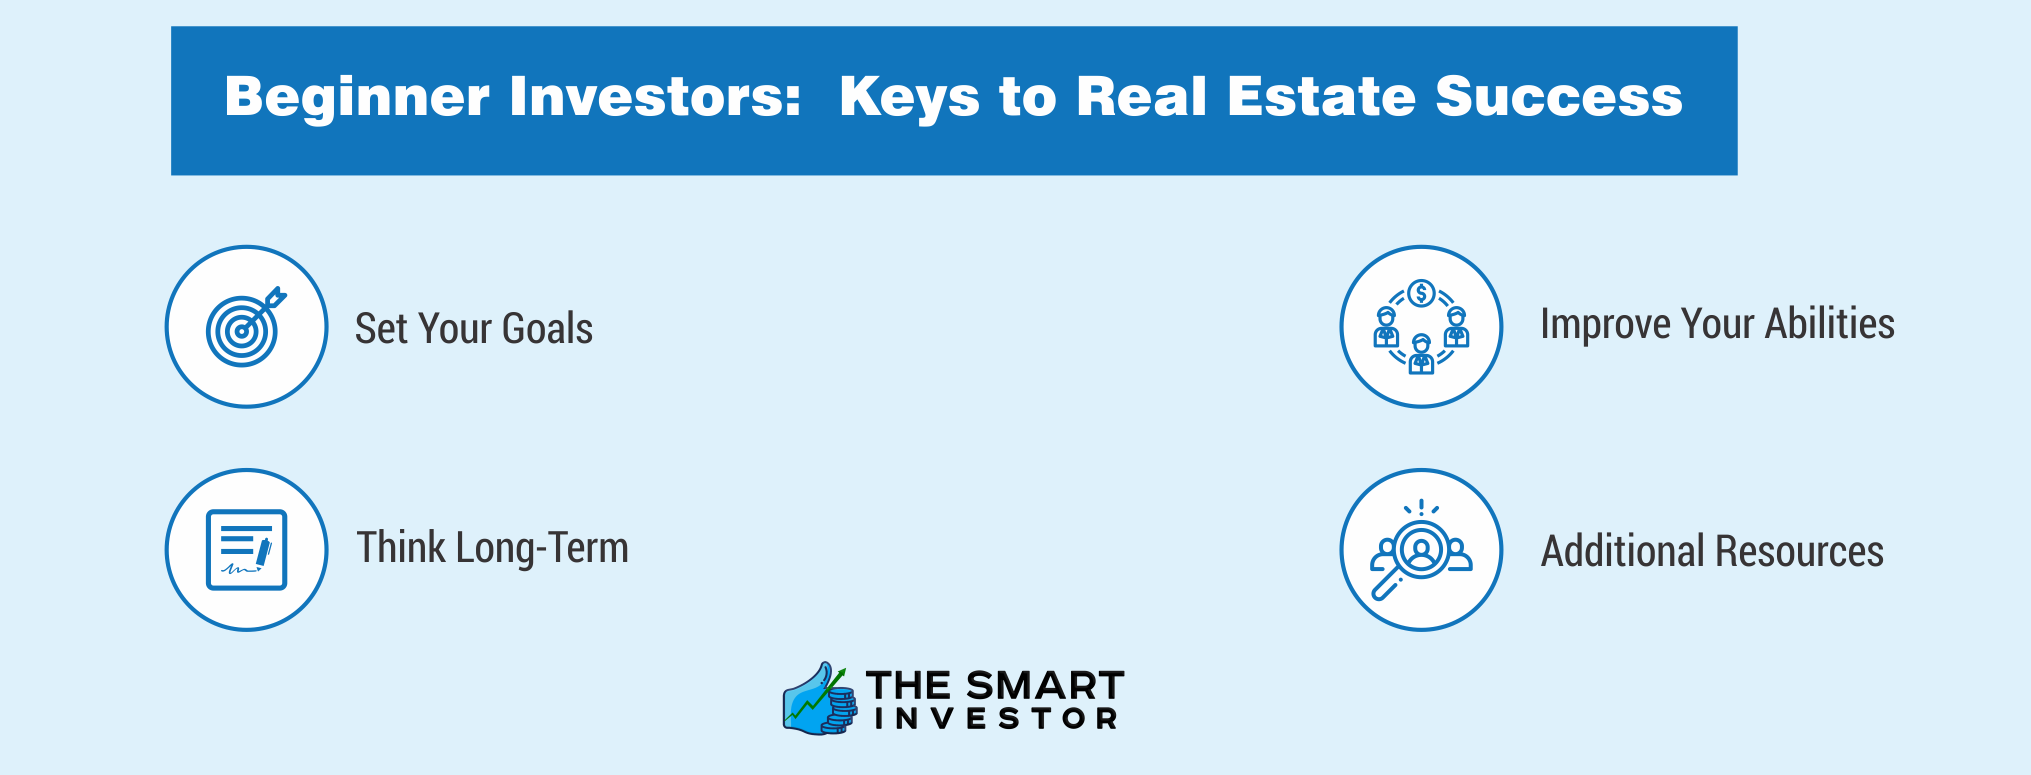 Beginner Investors - Keys to Real Estate Success